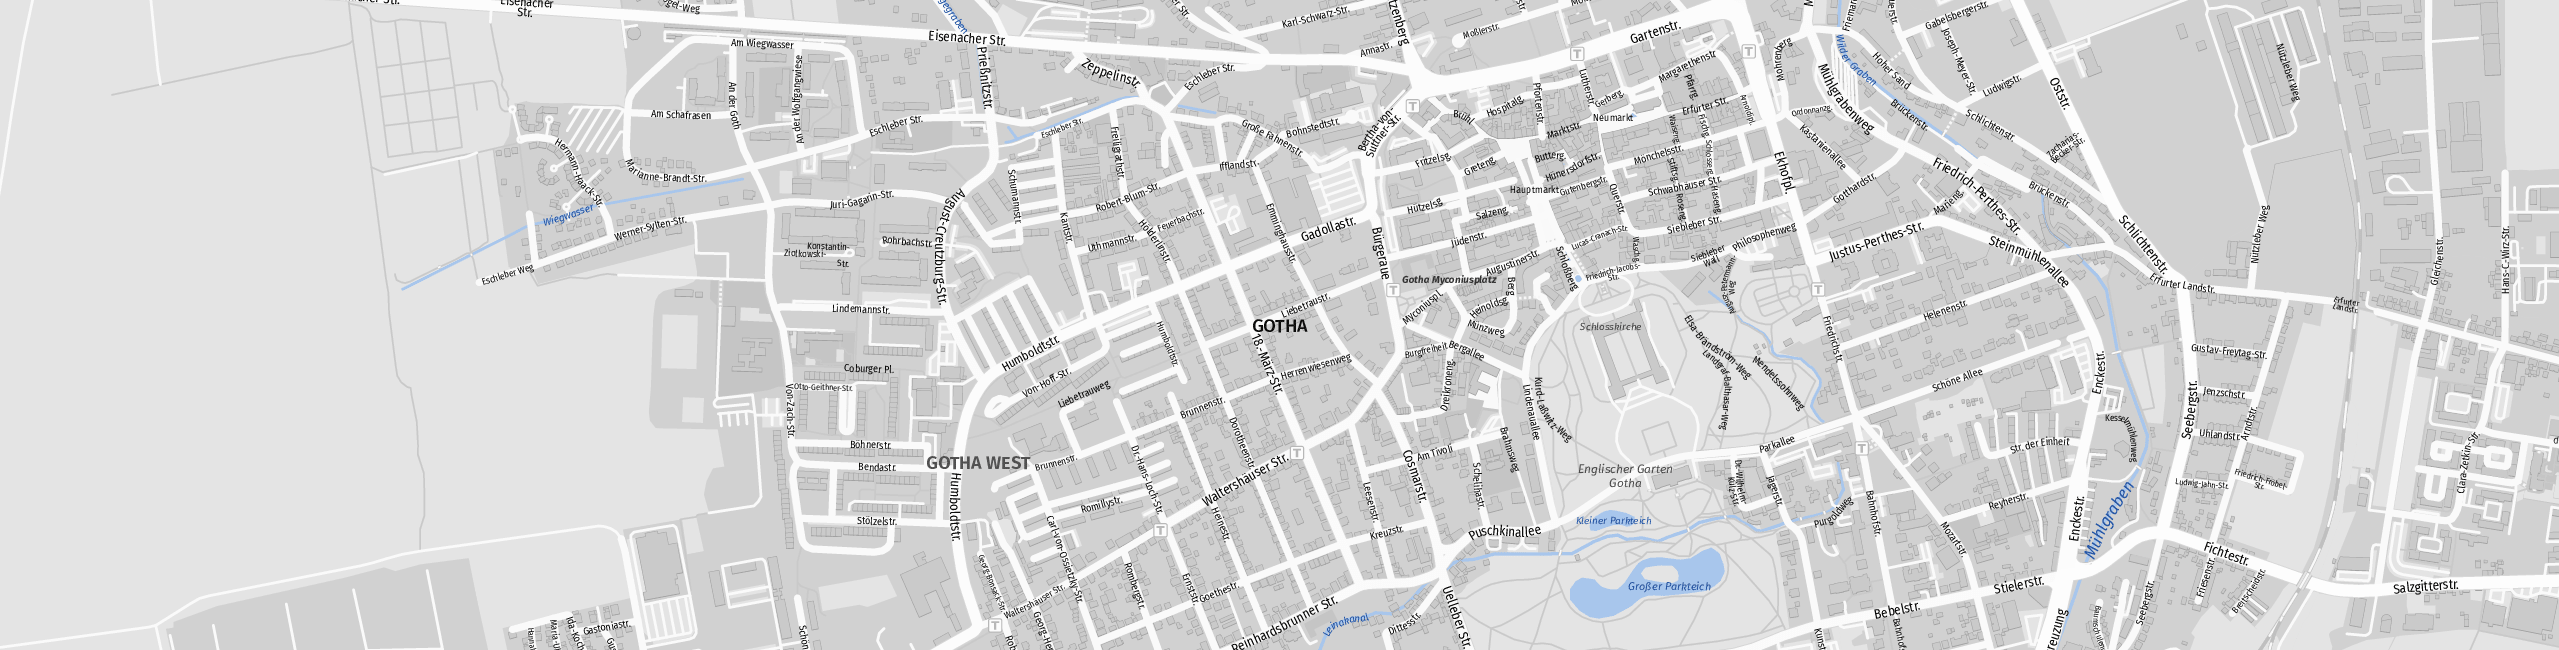 Stadtplan Gotha zum Downloaden.